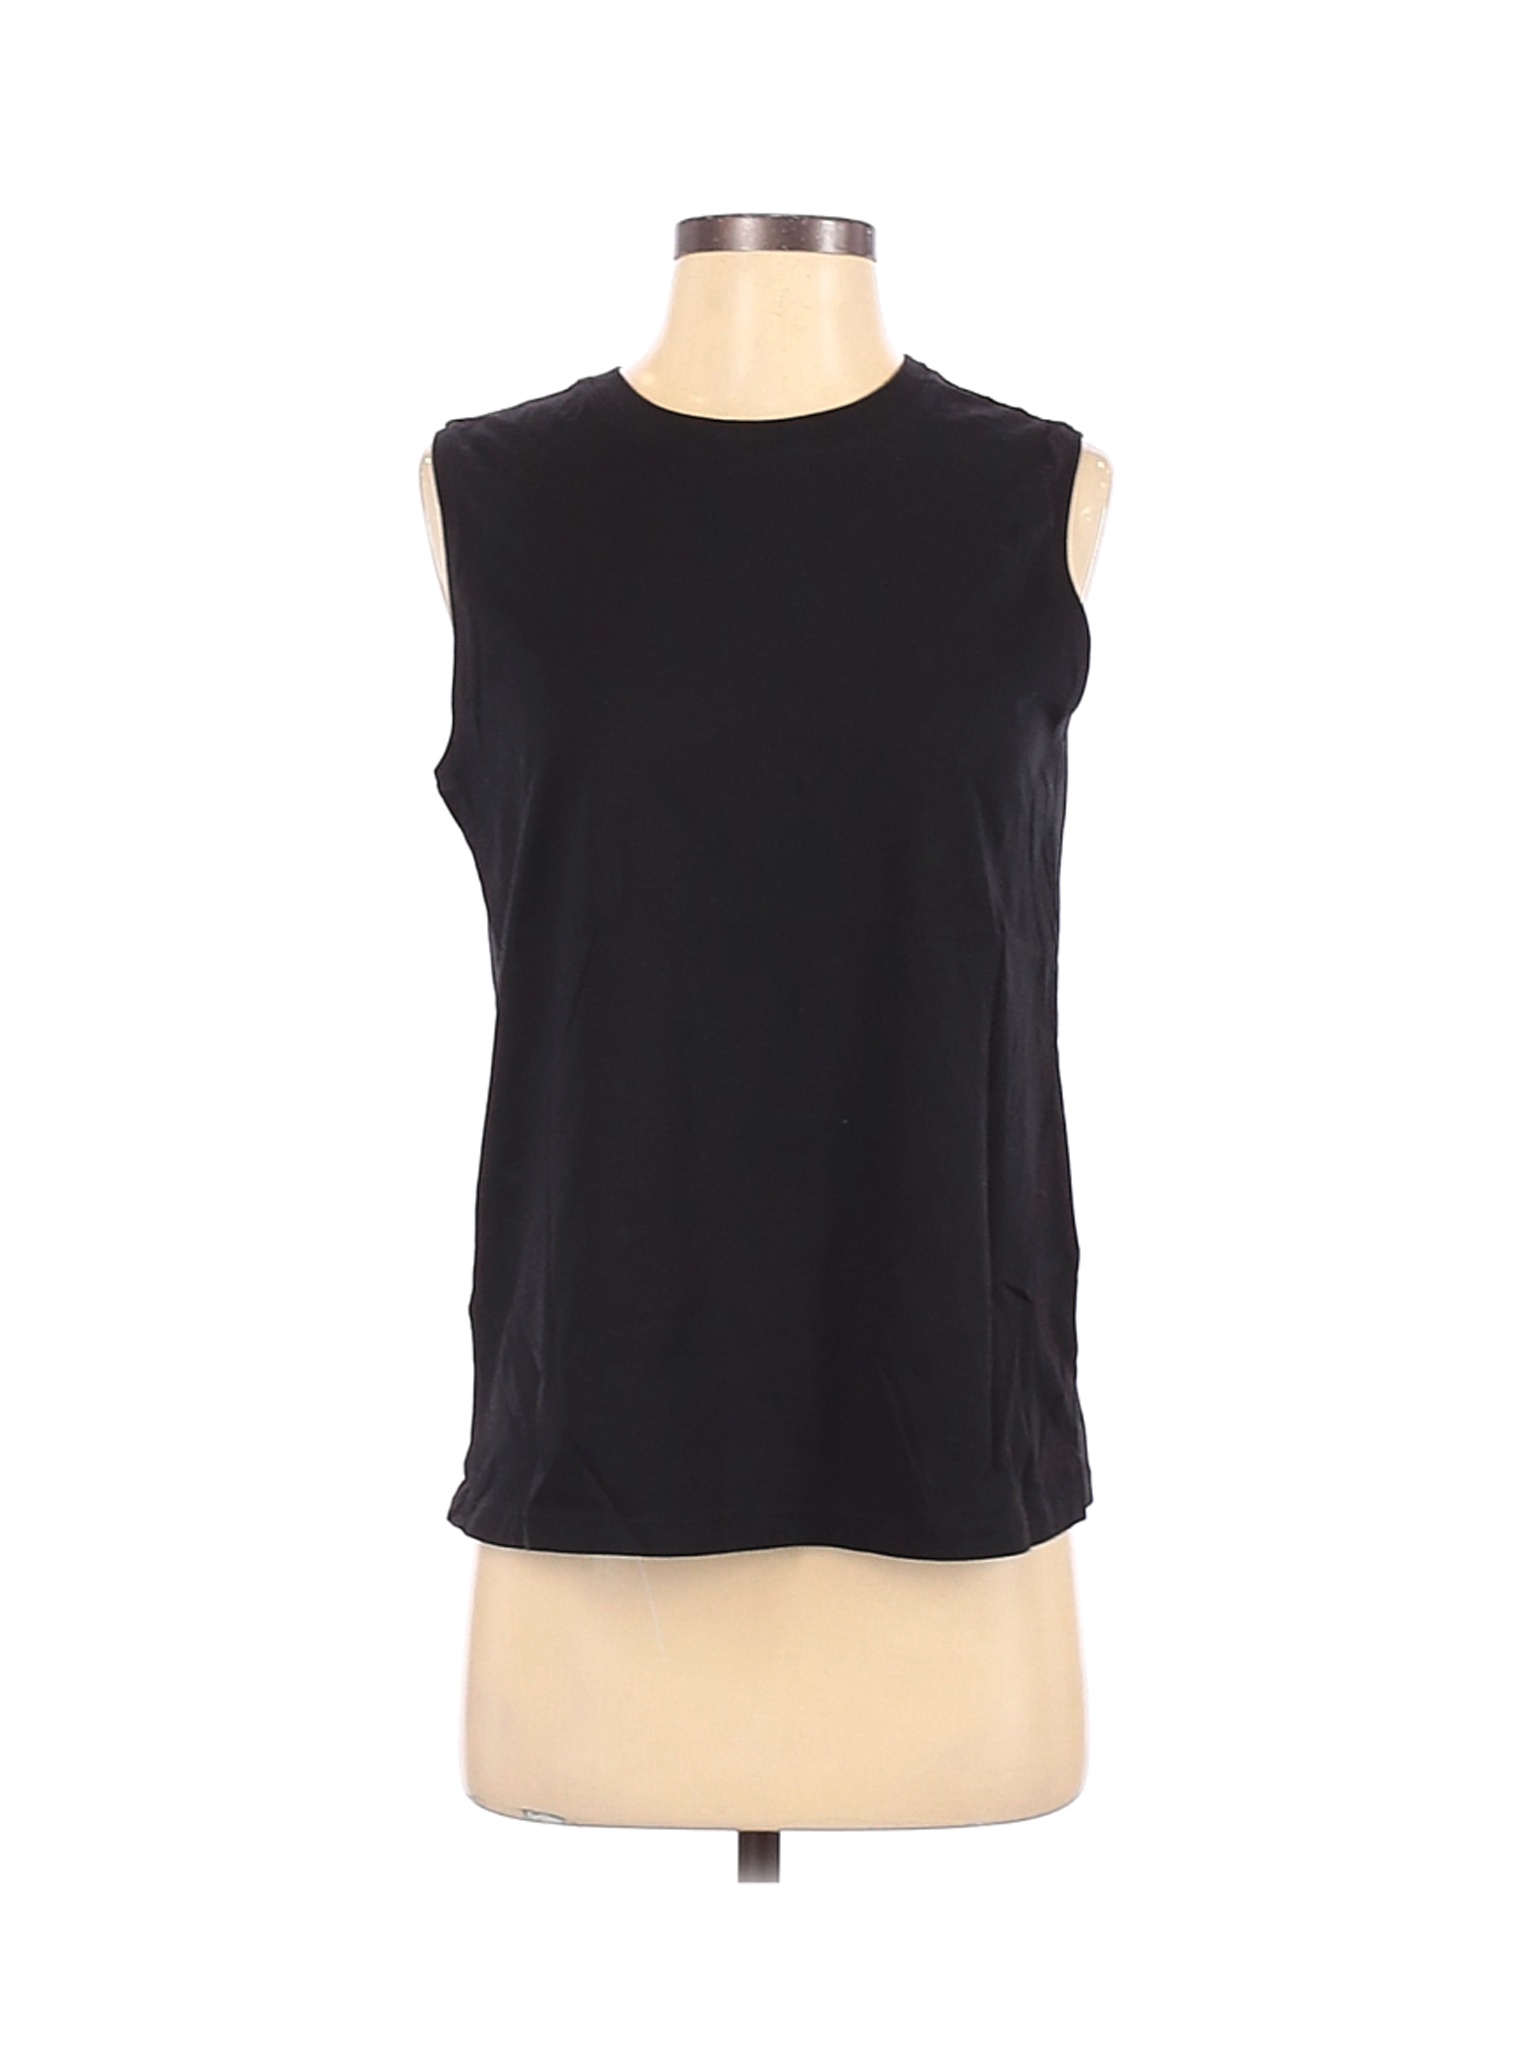 Uniqlo Women Black Sleeveless T-Shirt S | eBay